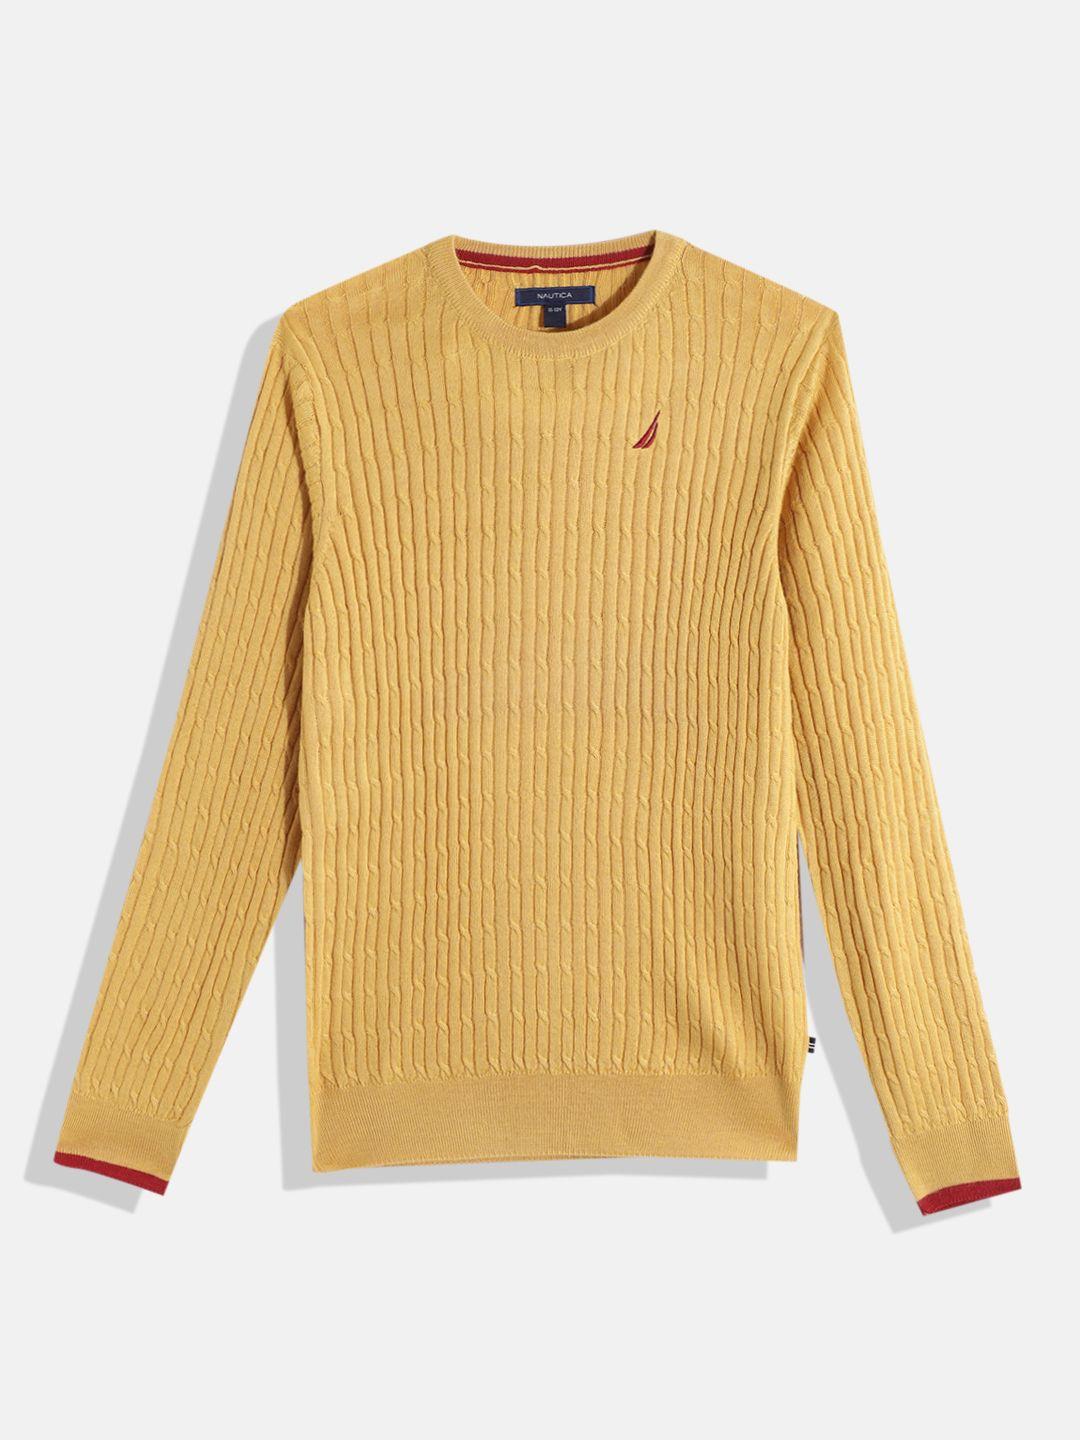 nautica-boys-mustard-yellow-self-design-cable-knit-round-neck-pullover